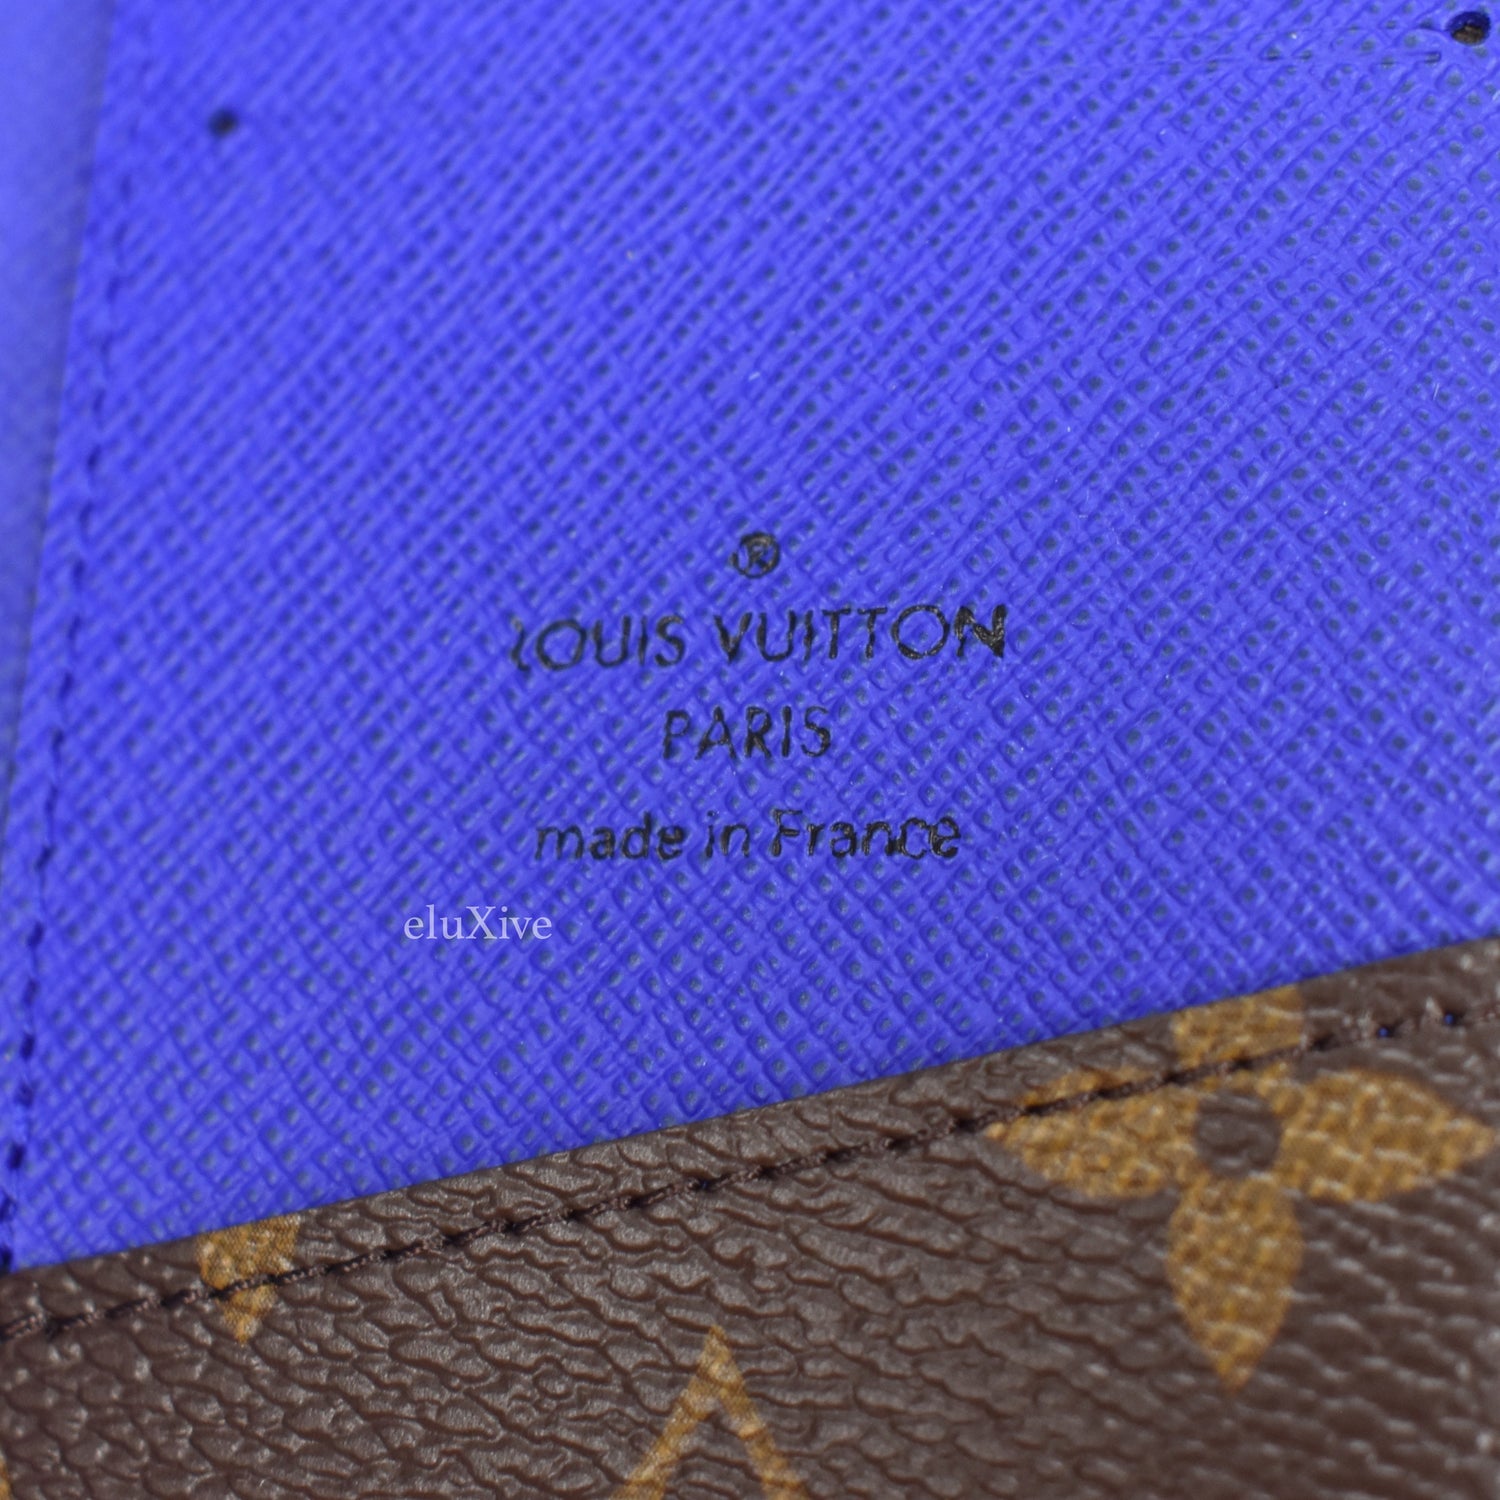 Louis Vuitton Pacific Blue Monogram Pocket Organizer